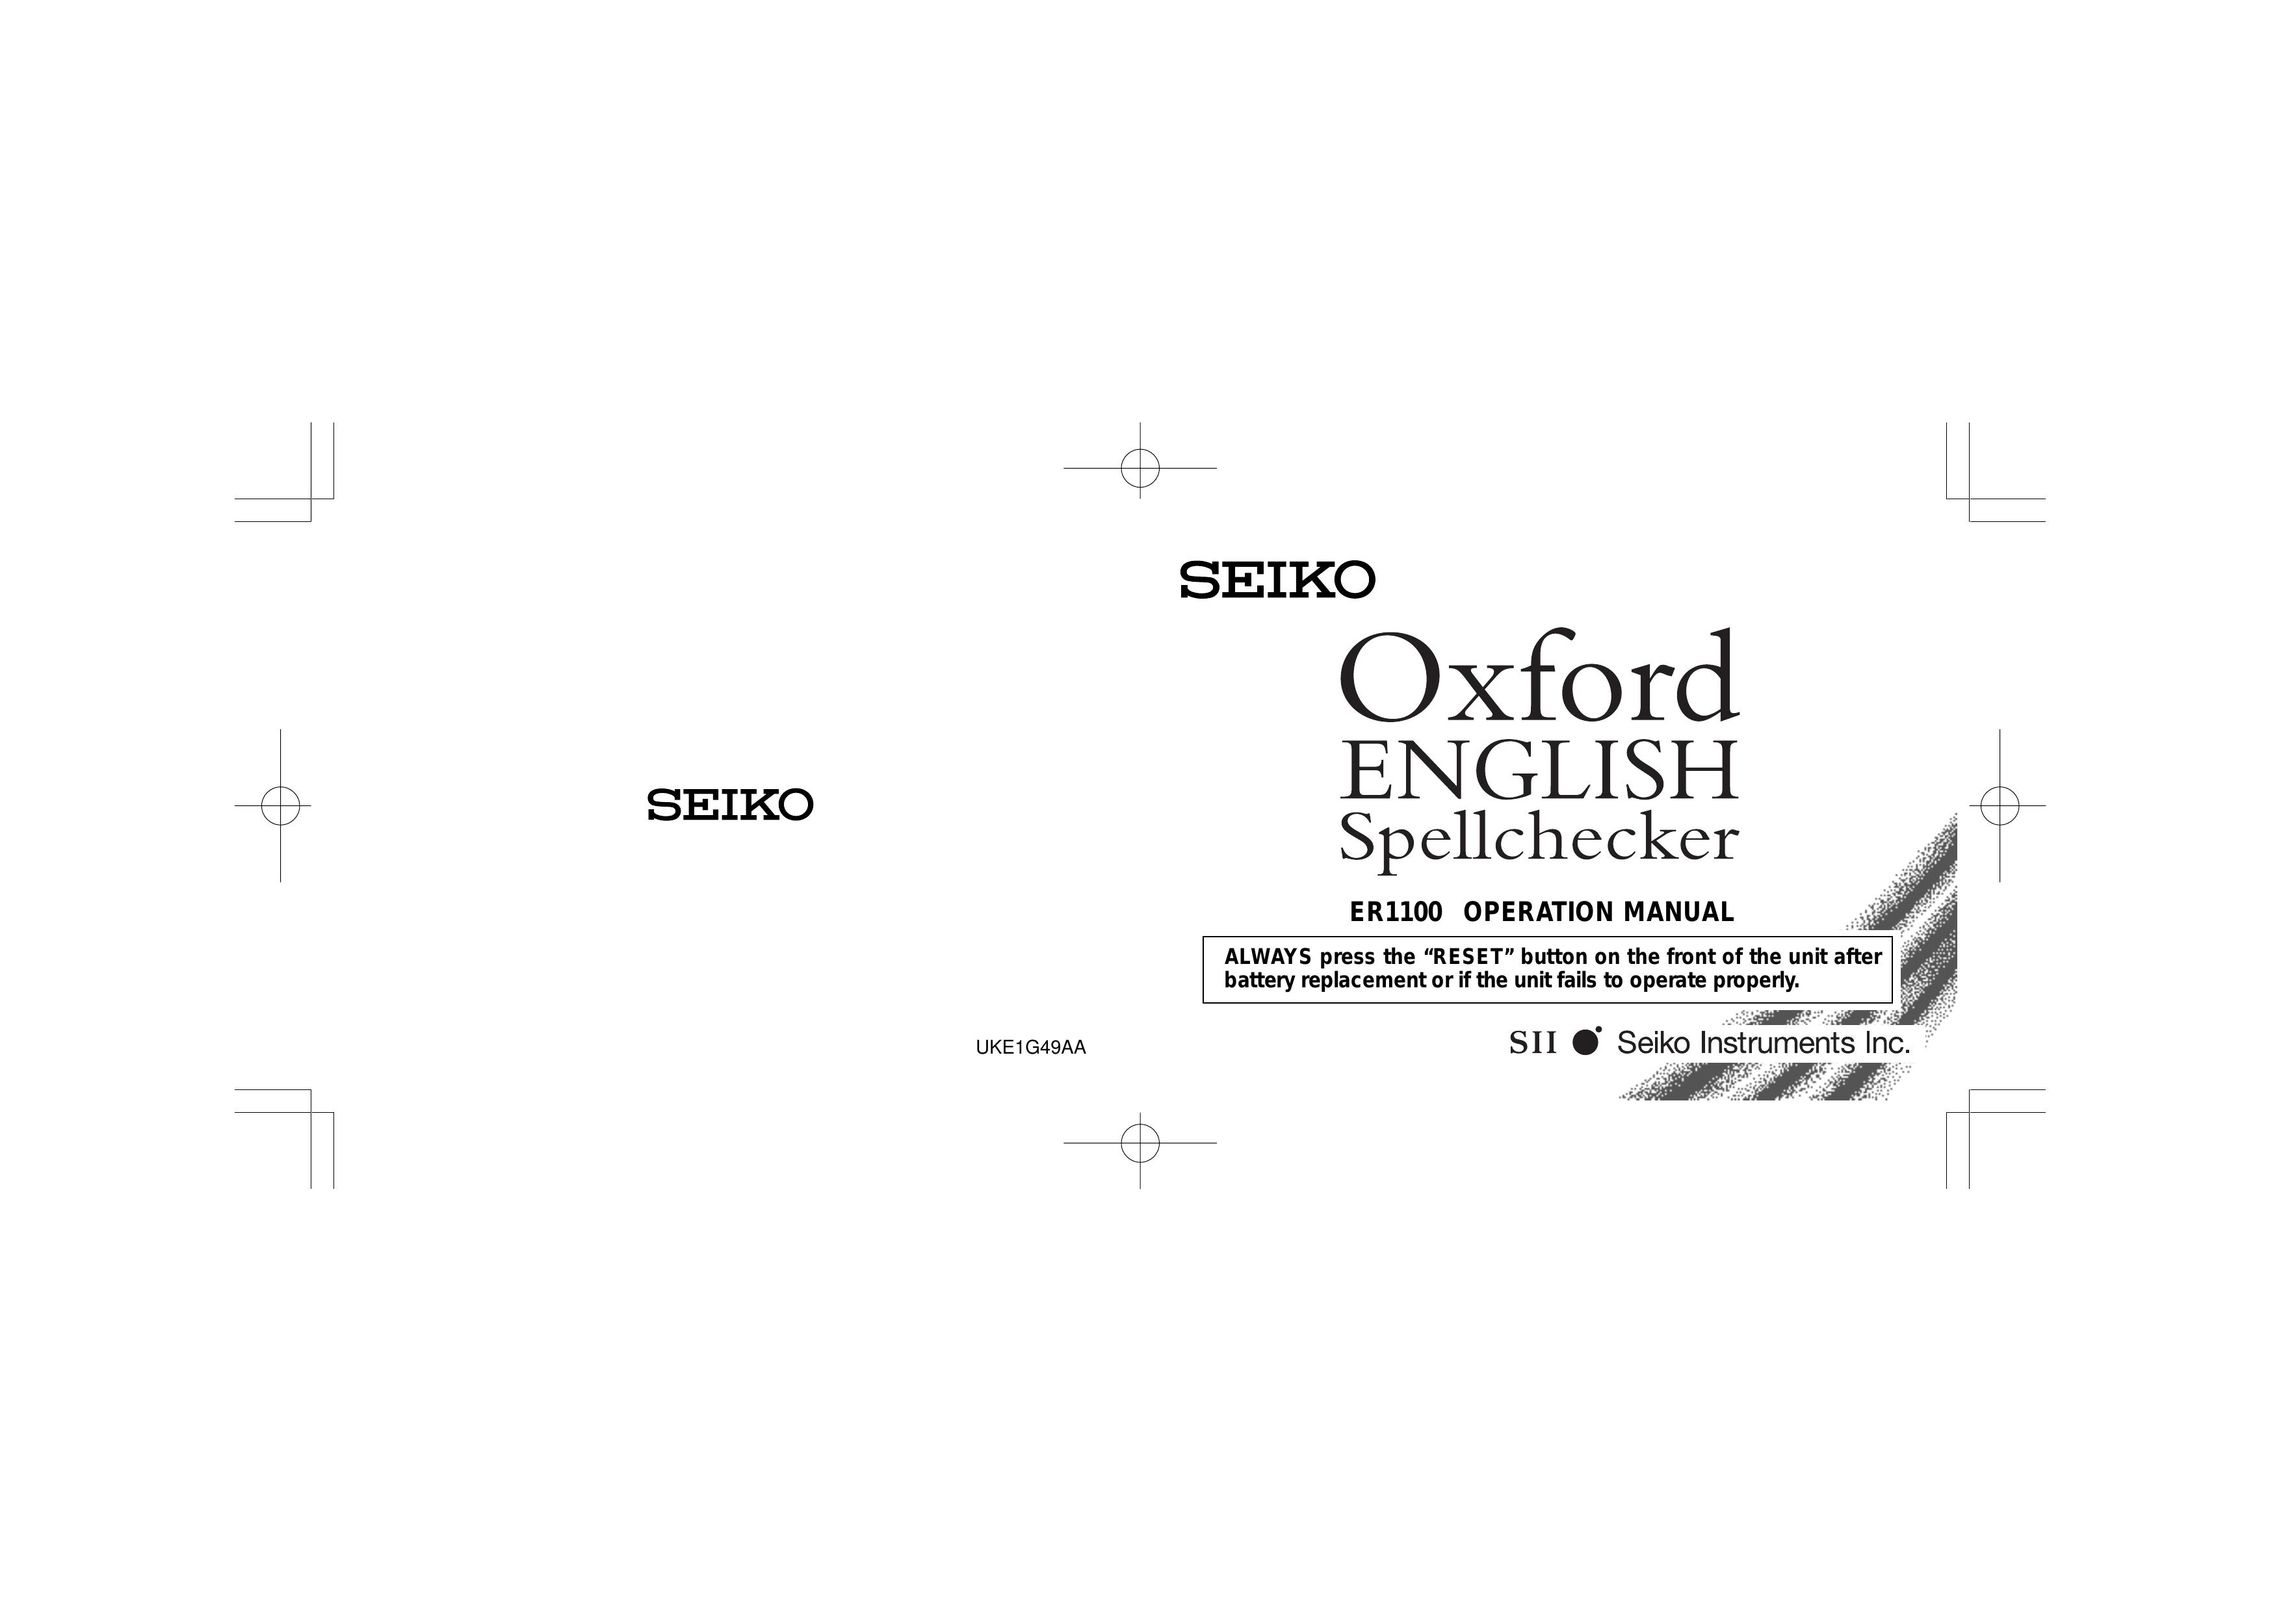 Seiko Instruments Seiko Oxford English Spellchecker Computer Accessories User Manual